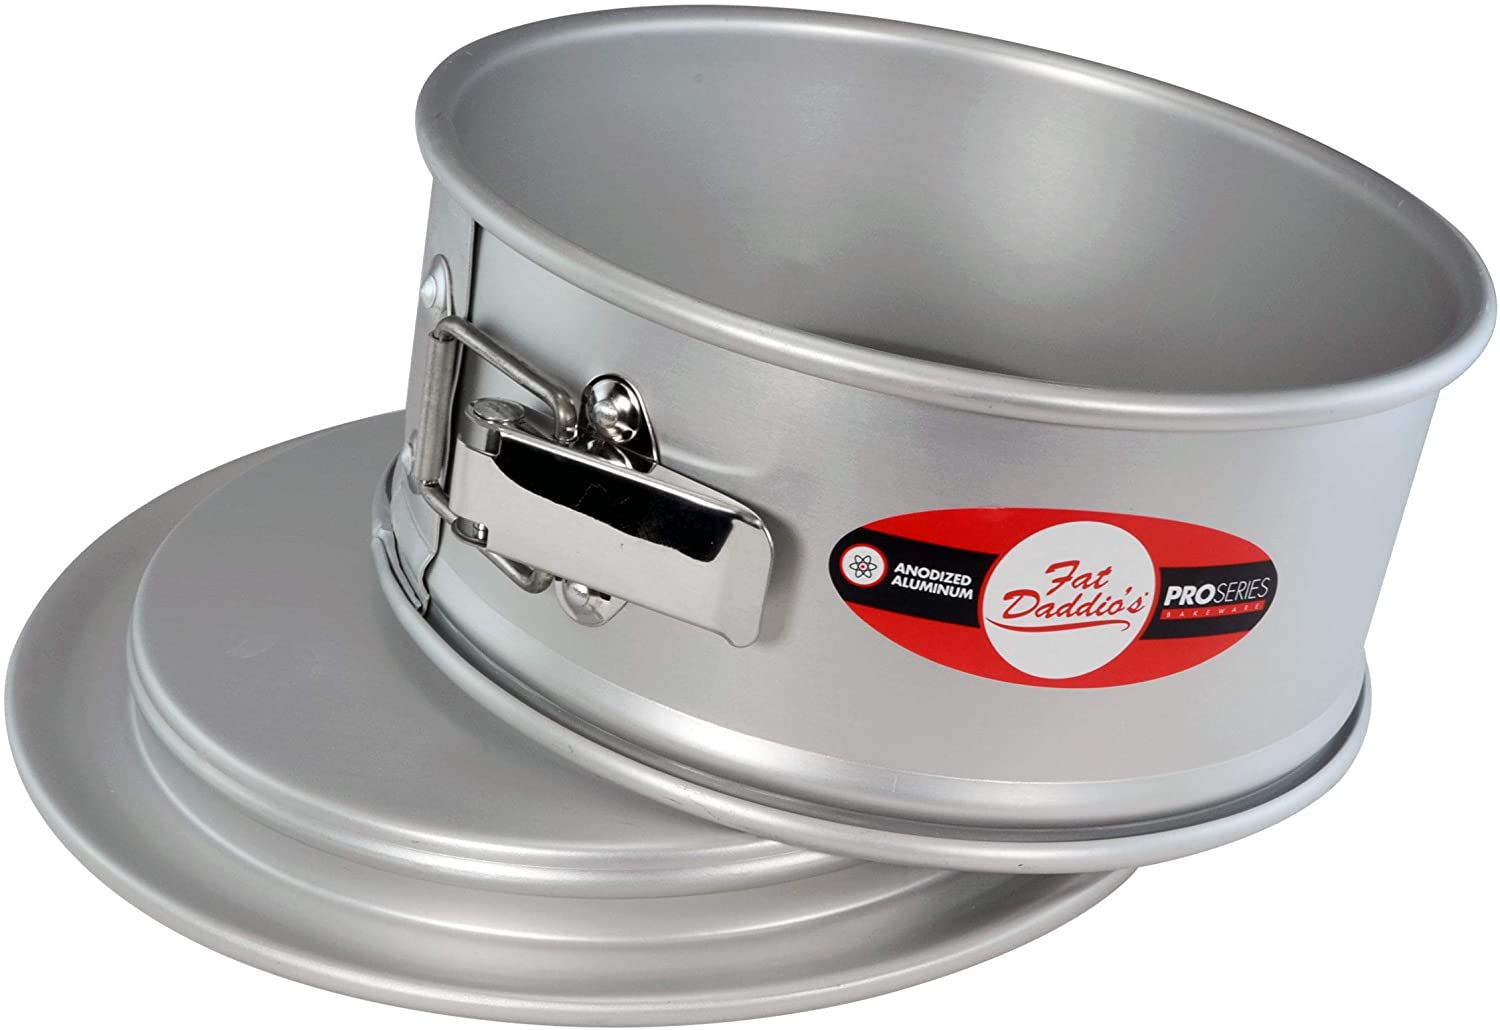  Zenker Tin Plated Steel Springform Pan, 9-Inch: Home & Kitchen